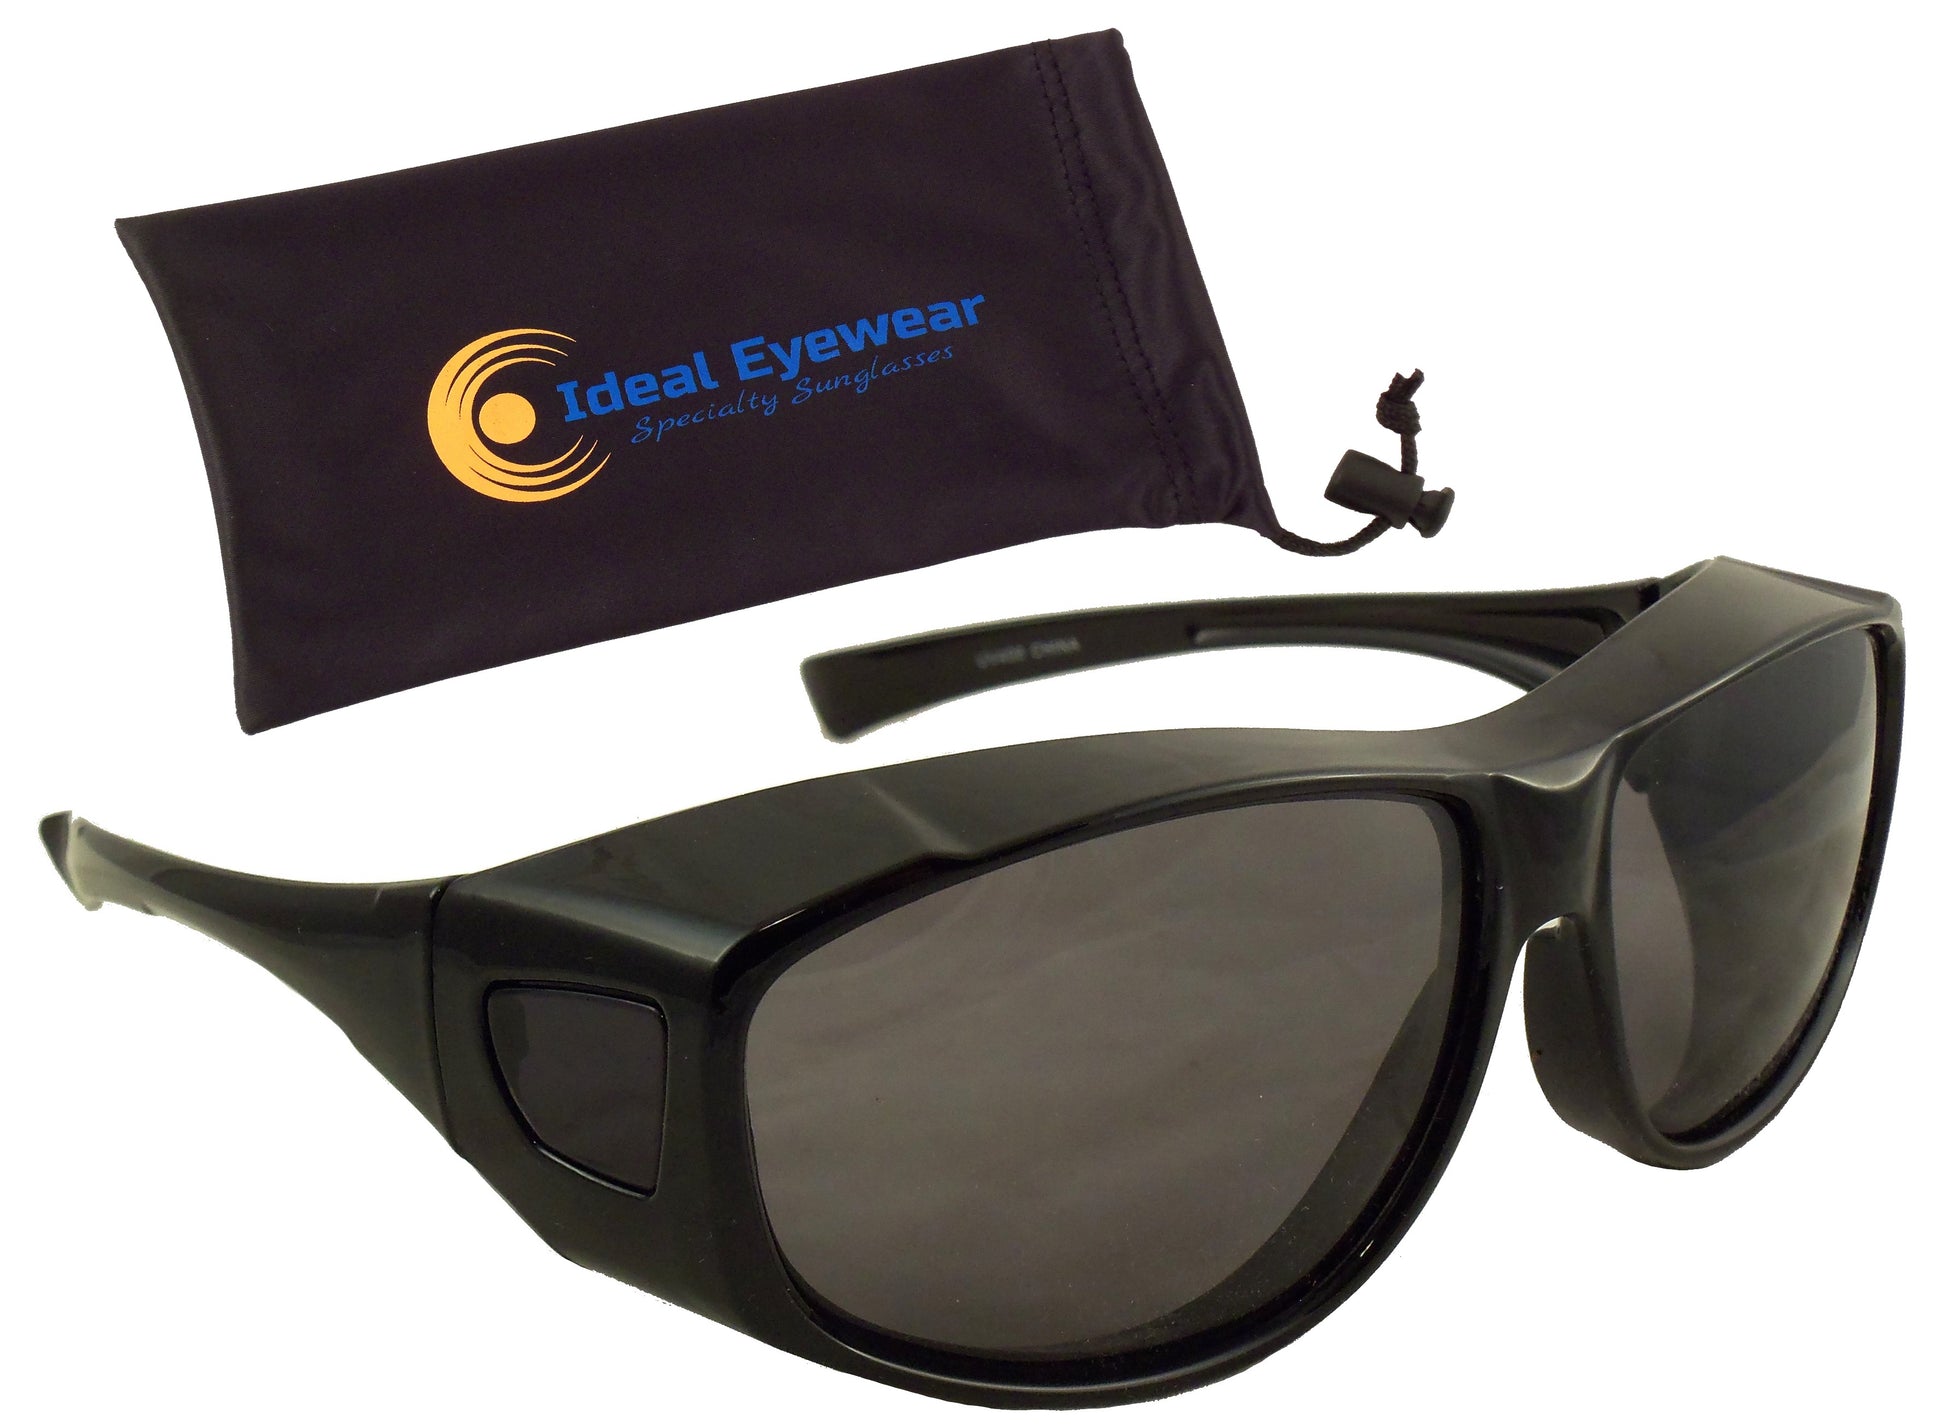 Fit Over Sunglasses with Polarized Lenses - Wear Over Prescription Glasses for Men or Women - Ideal Eyewear